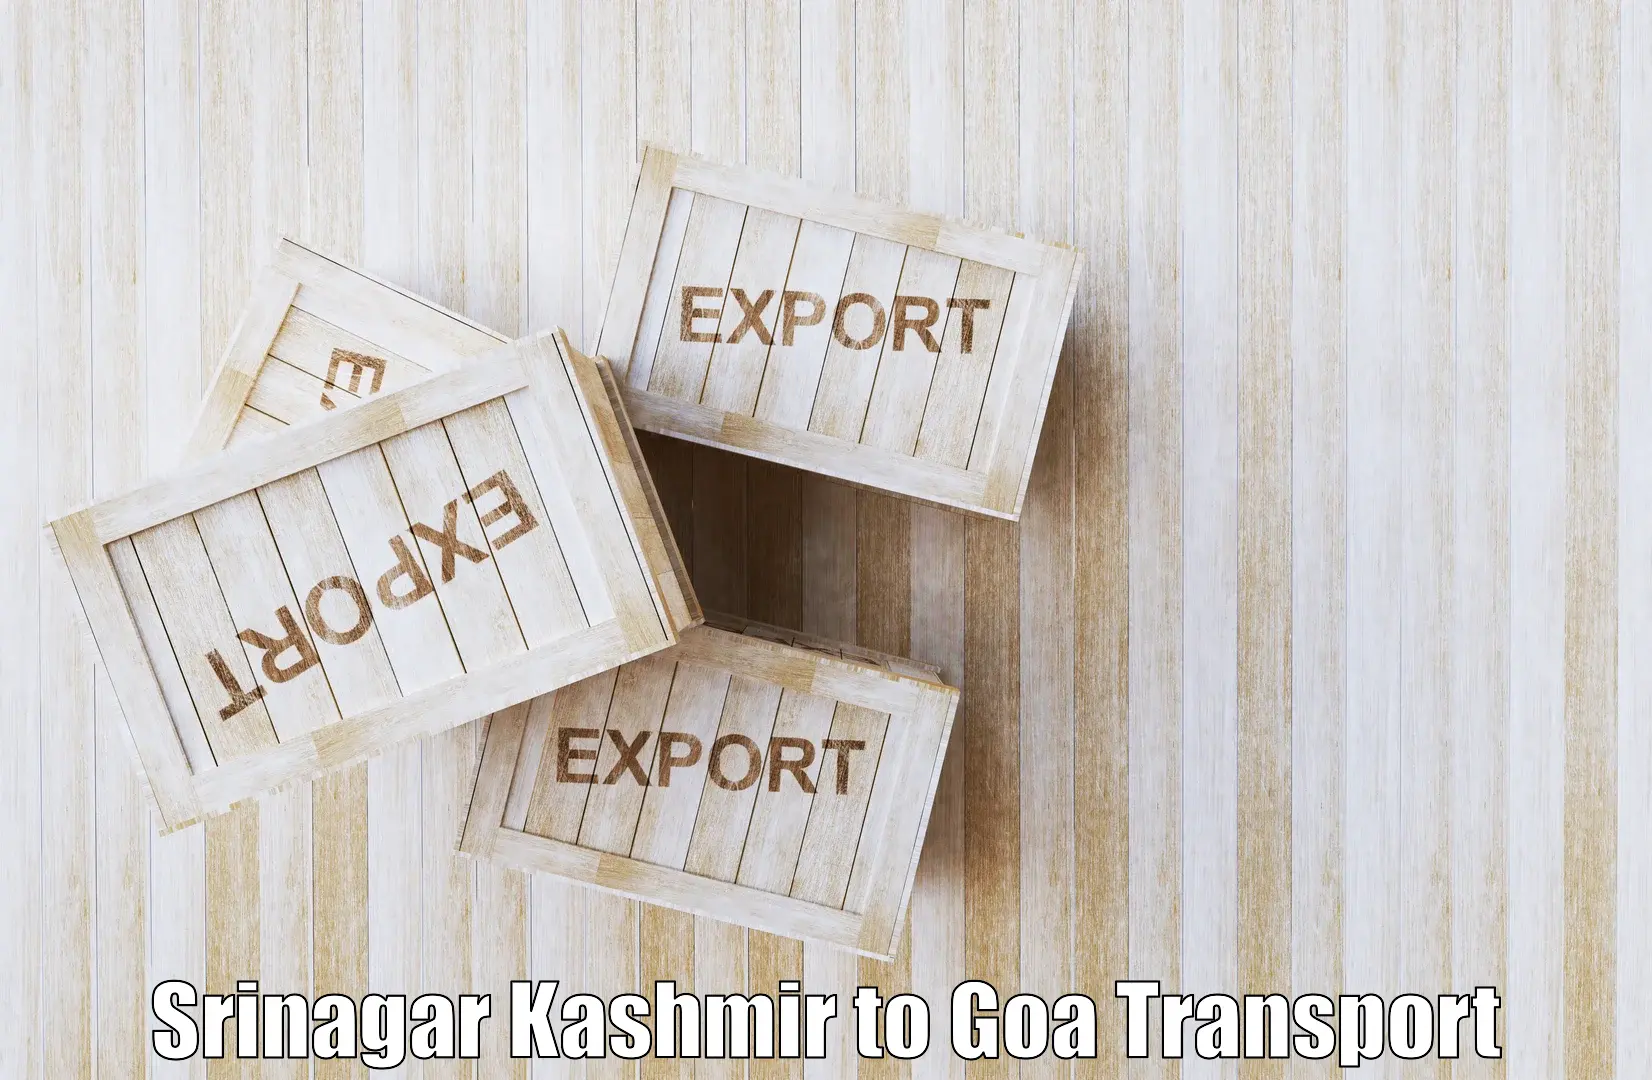 Commercial transport service Srinagar Kashmir to Goa